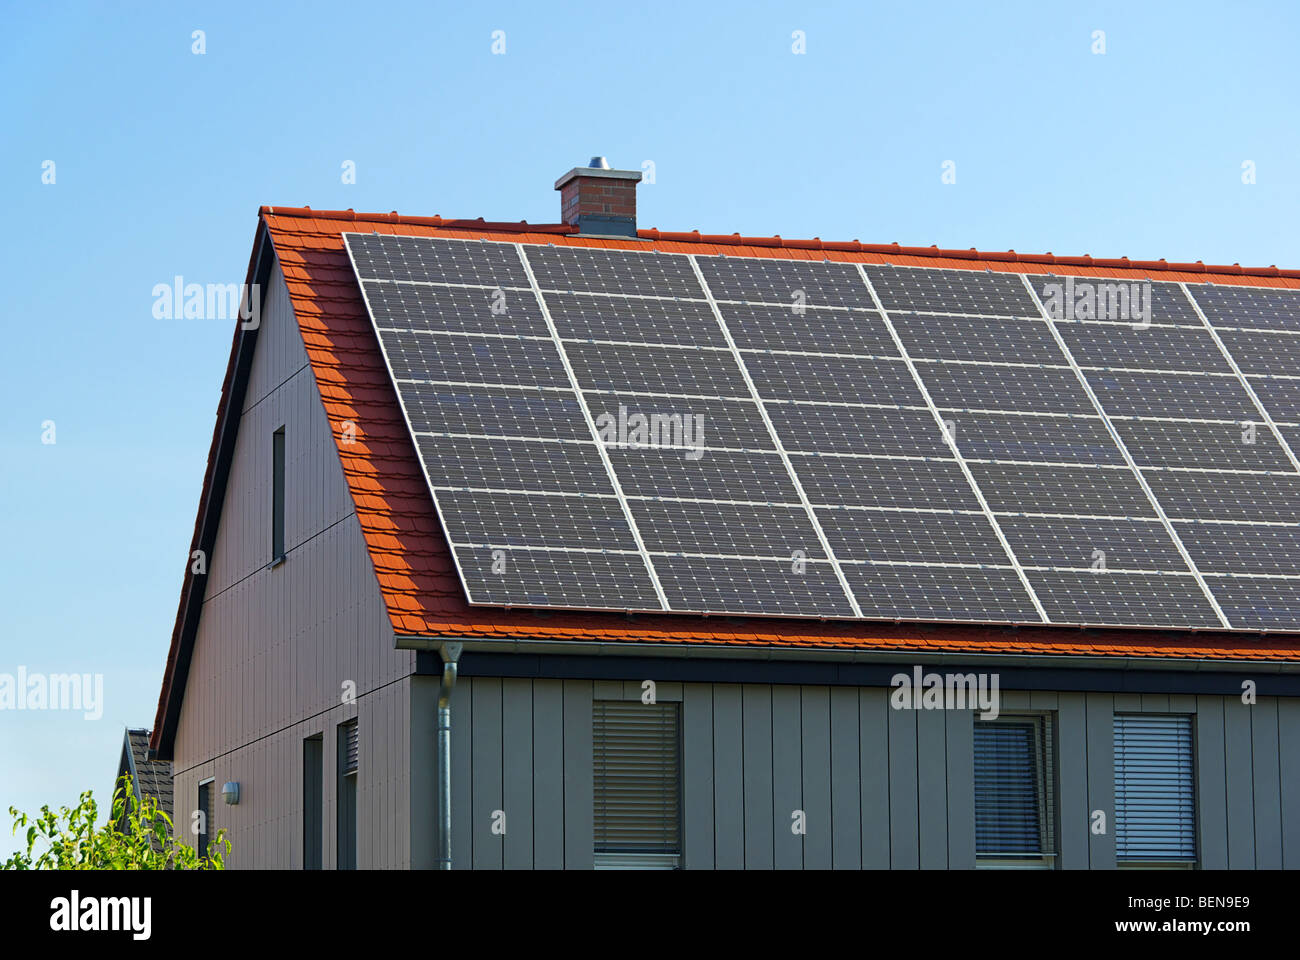 Solaranlage - solar plant 23 Stock Photo